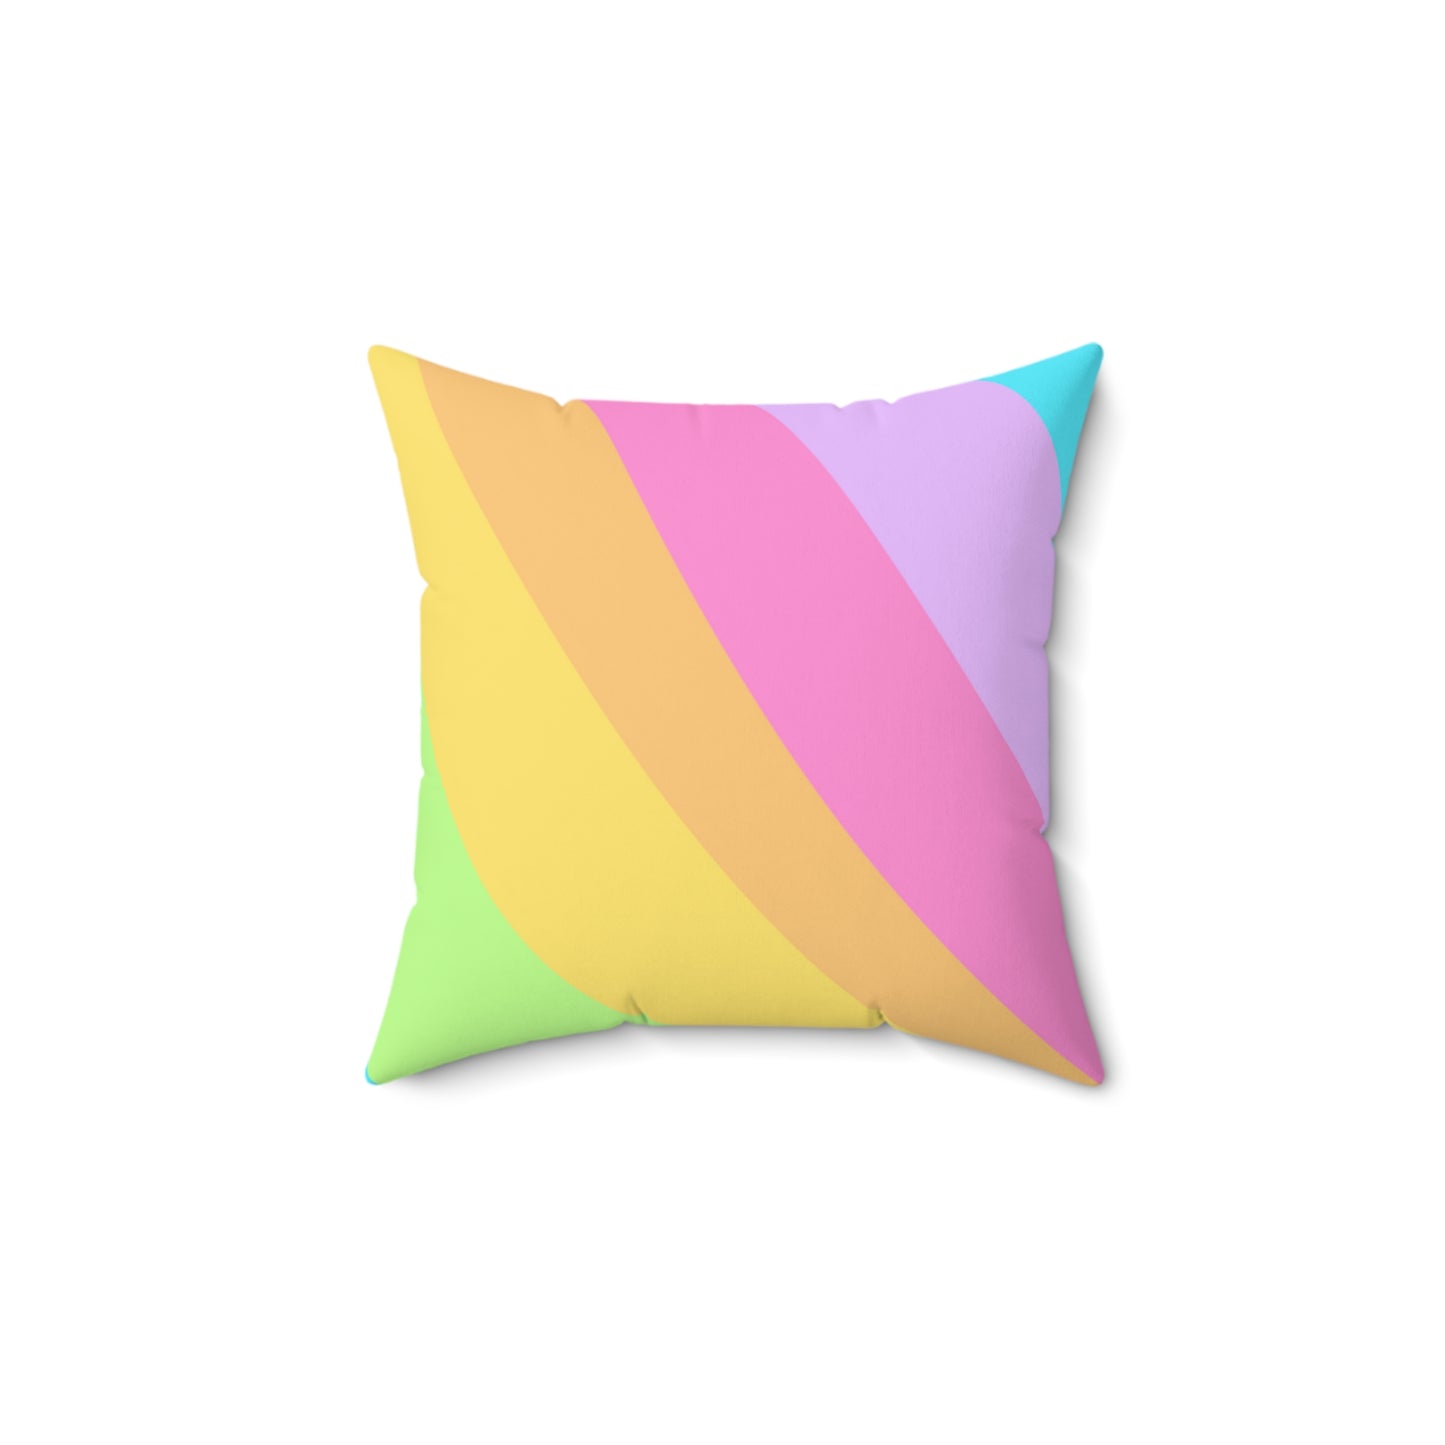 Neon Rainbow Swirl Square Pillow